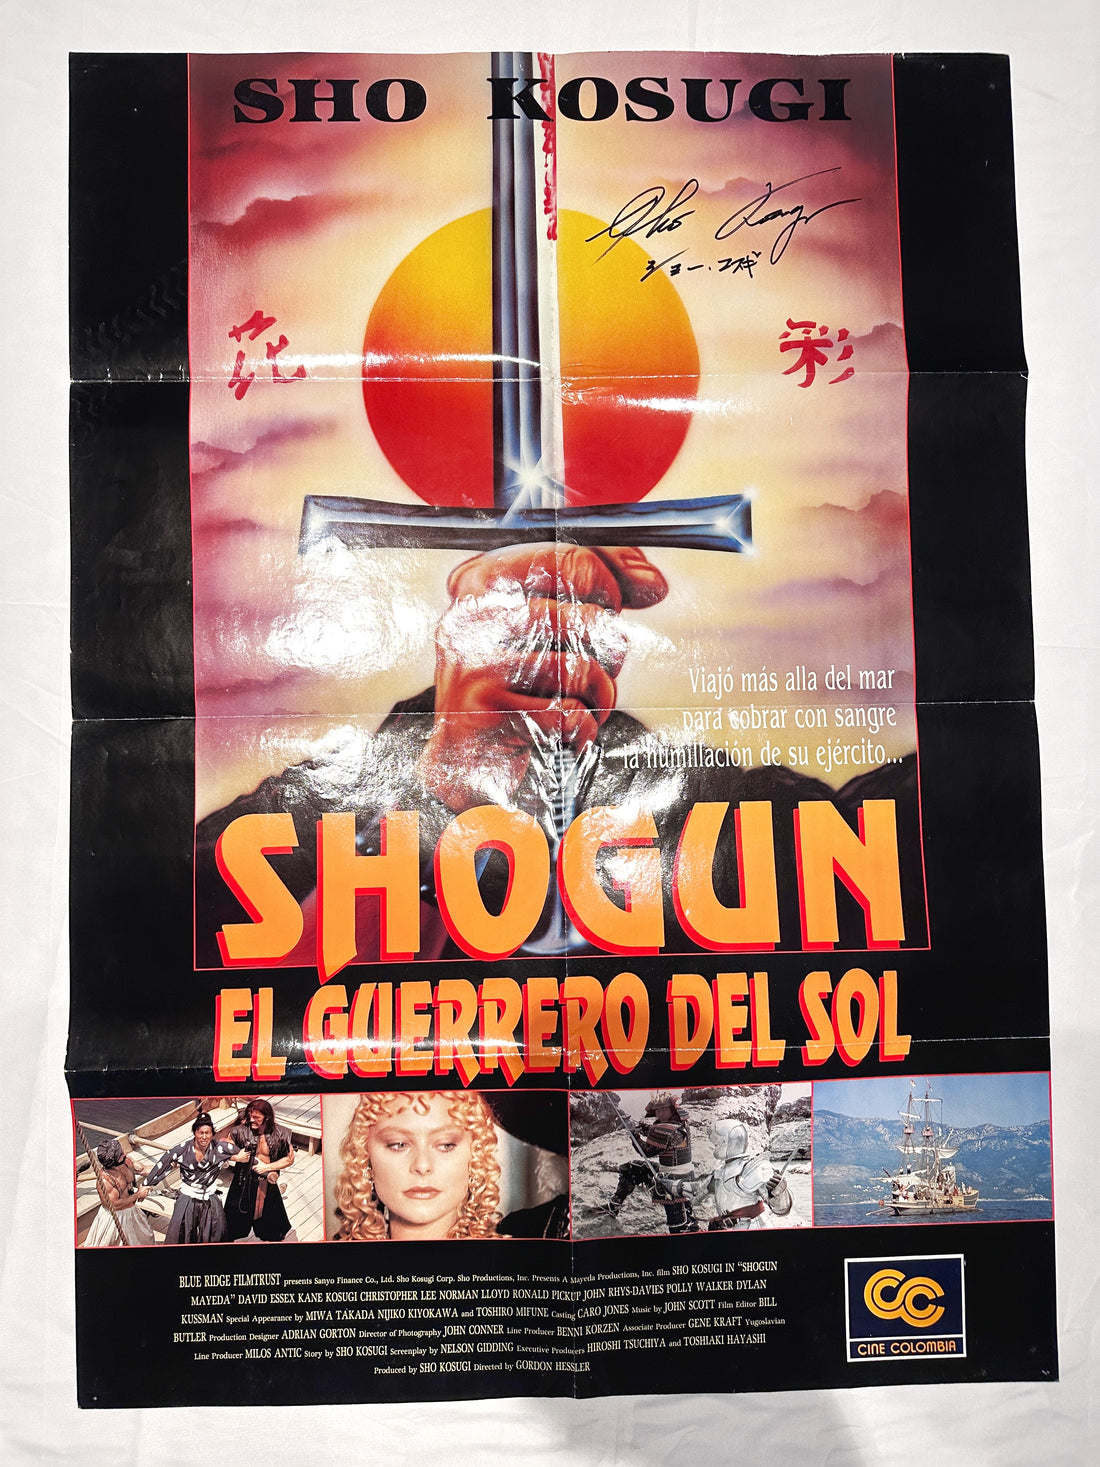 Sho Kosugi Autographed "SHOGUN MAYEDA" (1991) Original Theatrical COLOMBIAN poster.